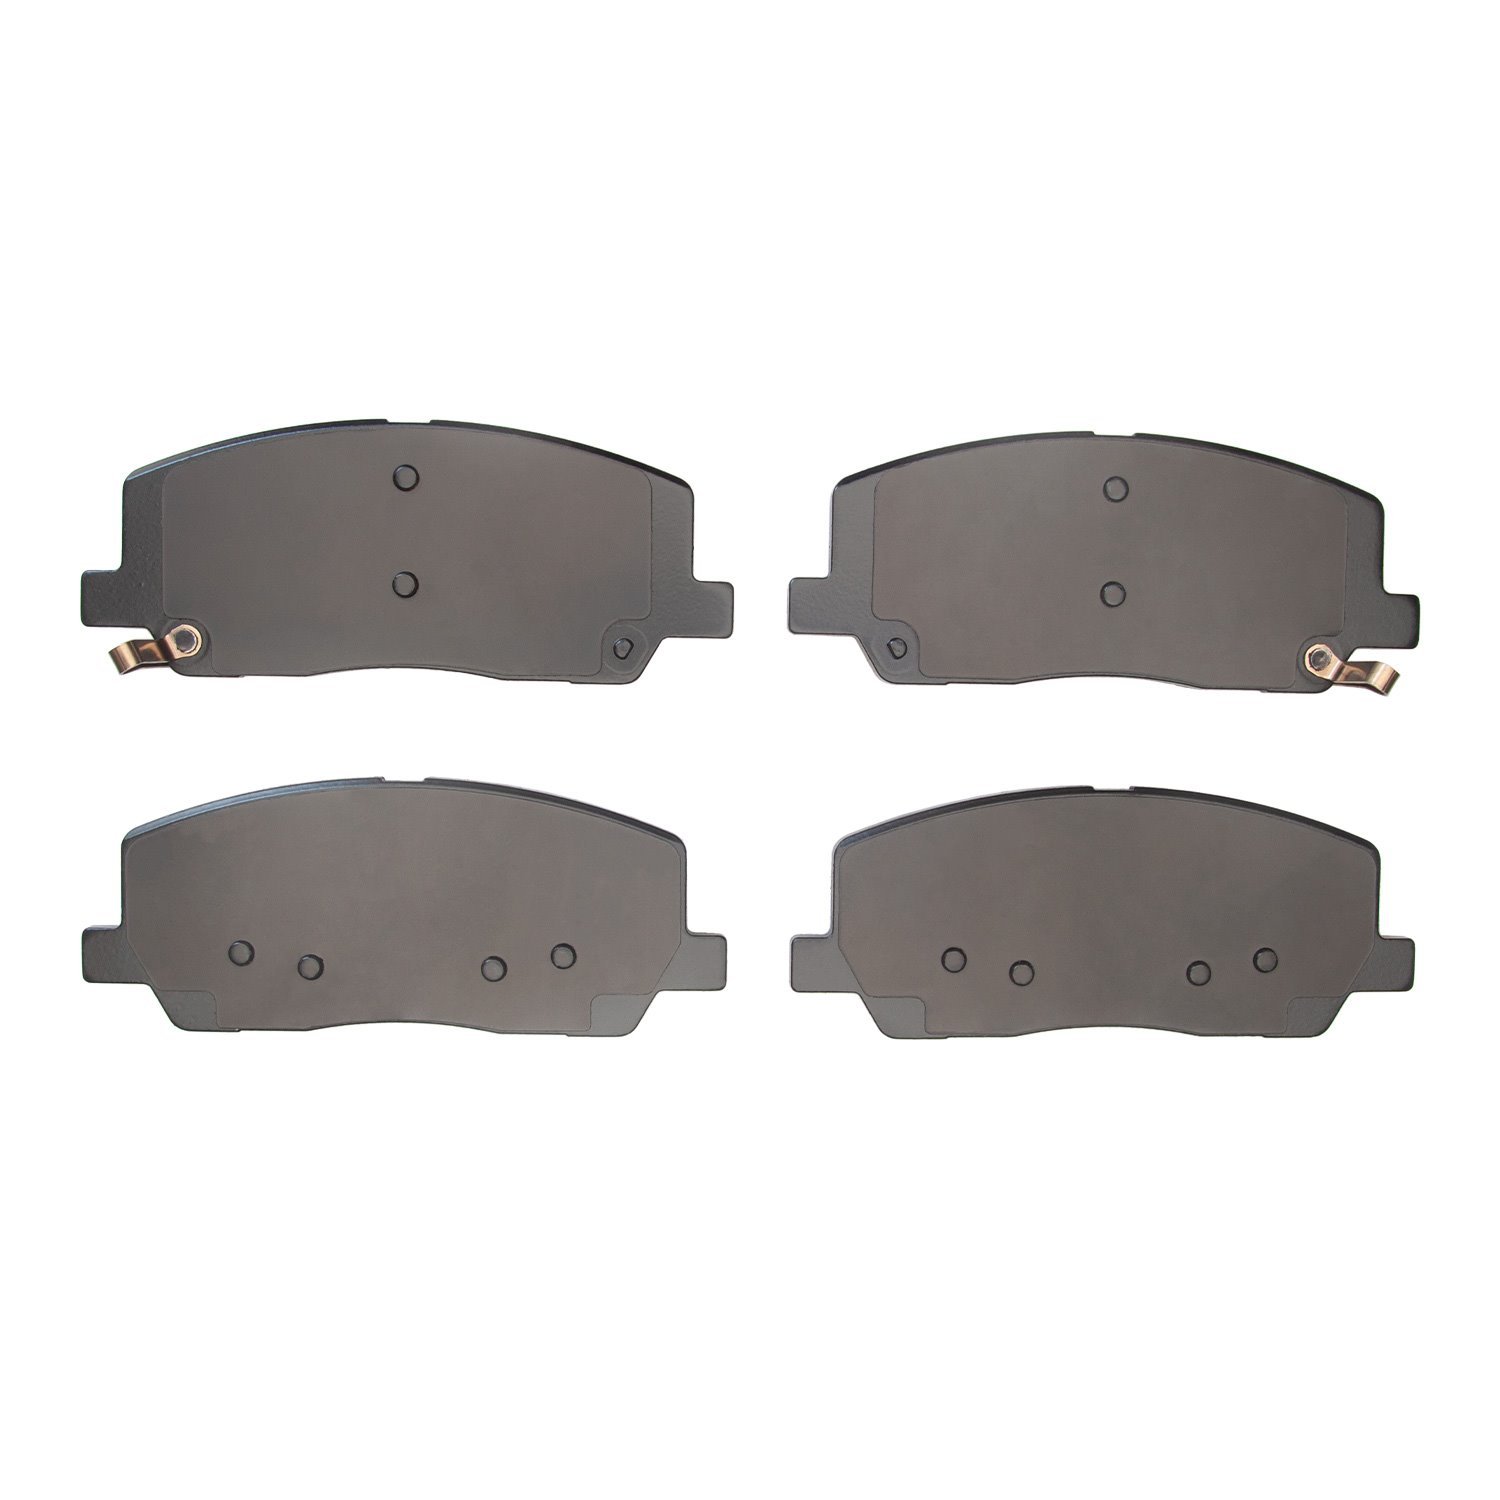 5000 Advanced Ceramic Brake Pads, Fits Select Kia/Hyundai/Genesis